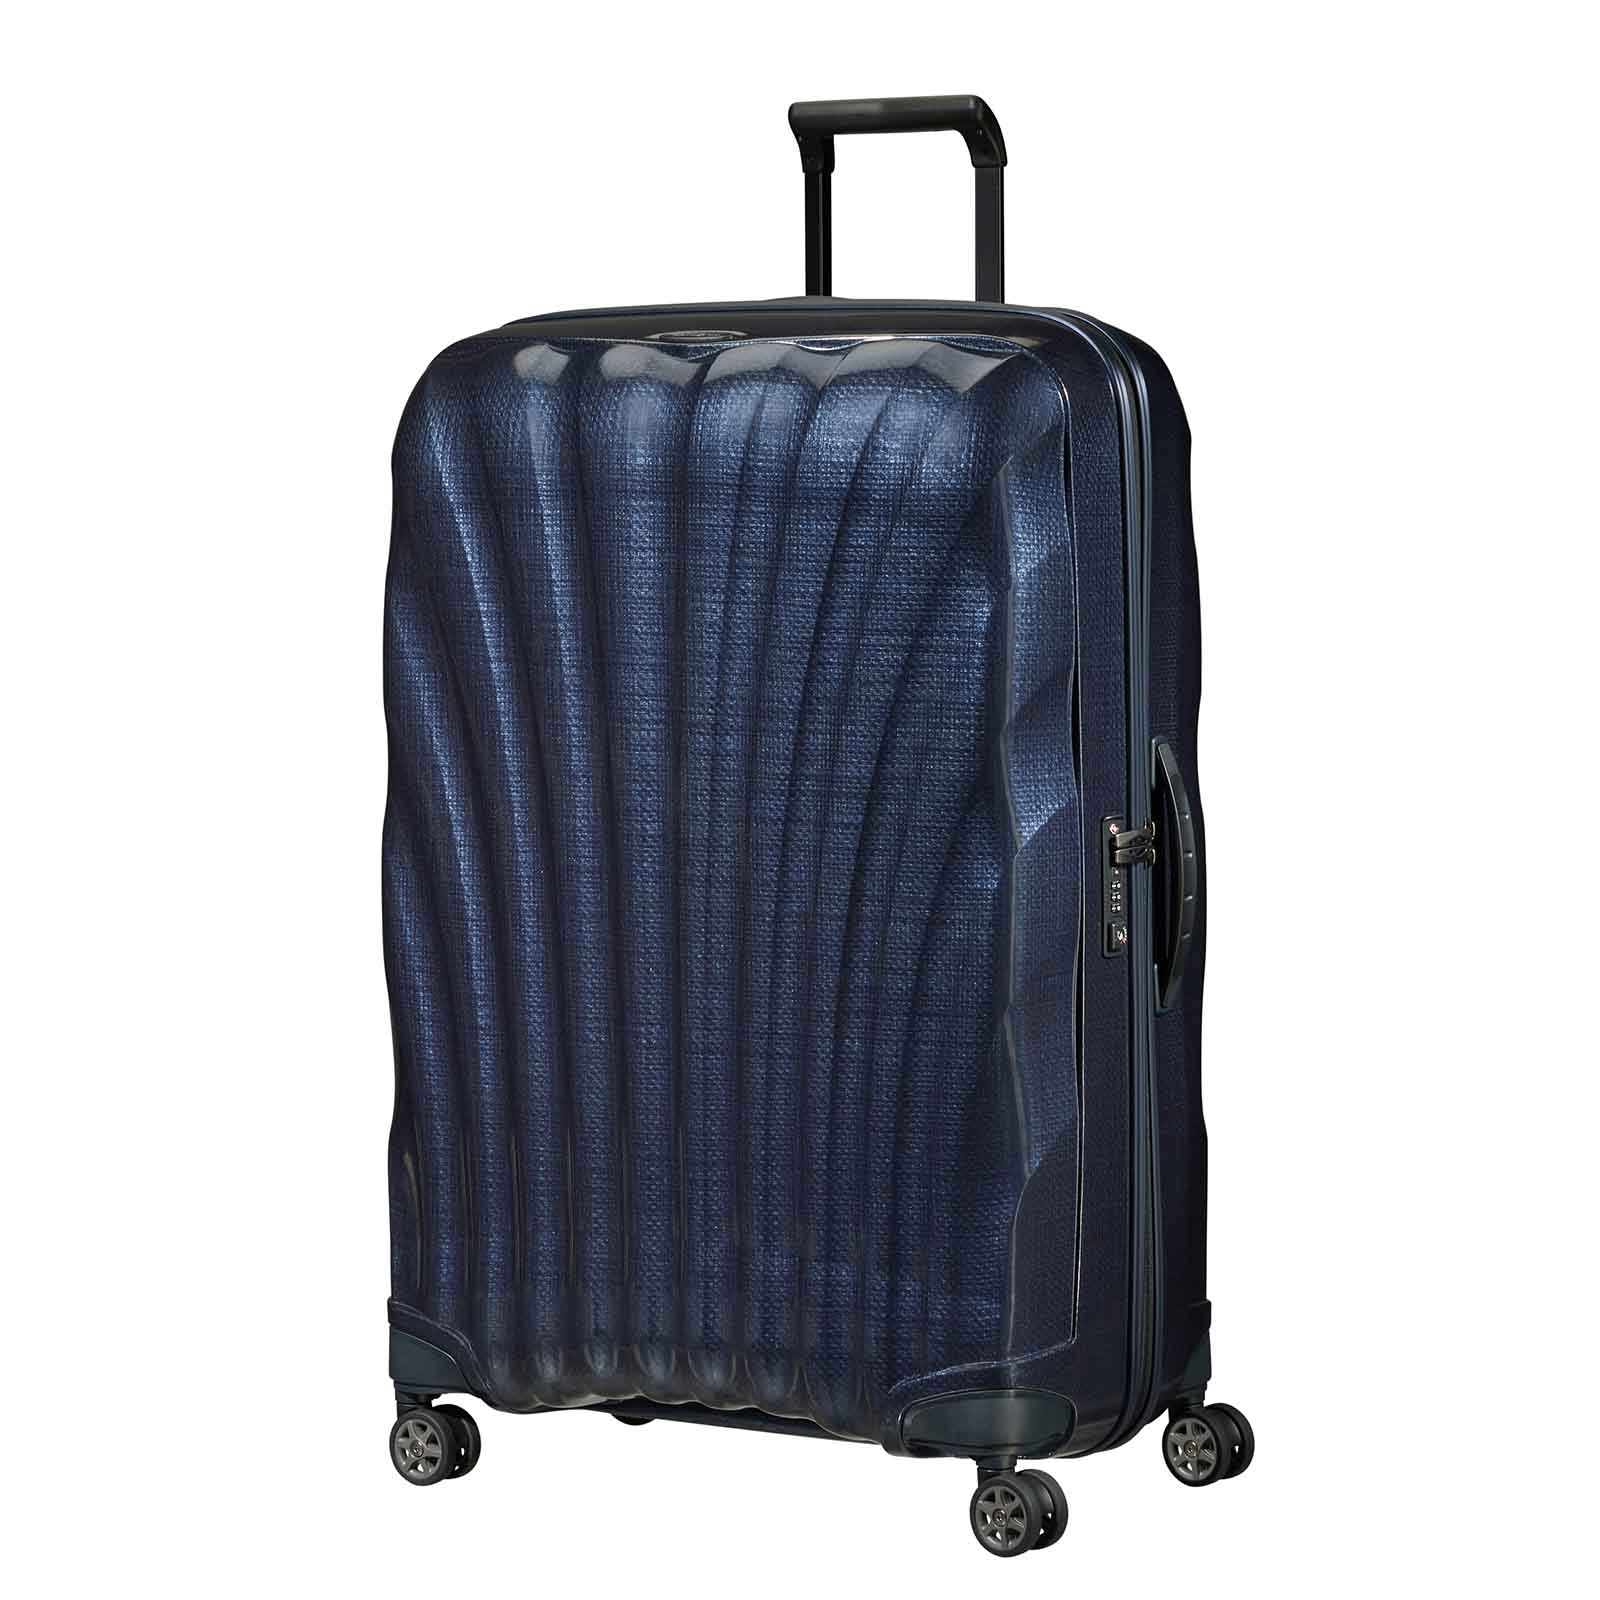 Samsonite-C-Lite-81cm-Suitcase-Midnight-Blue-Front-Angle